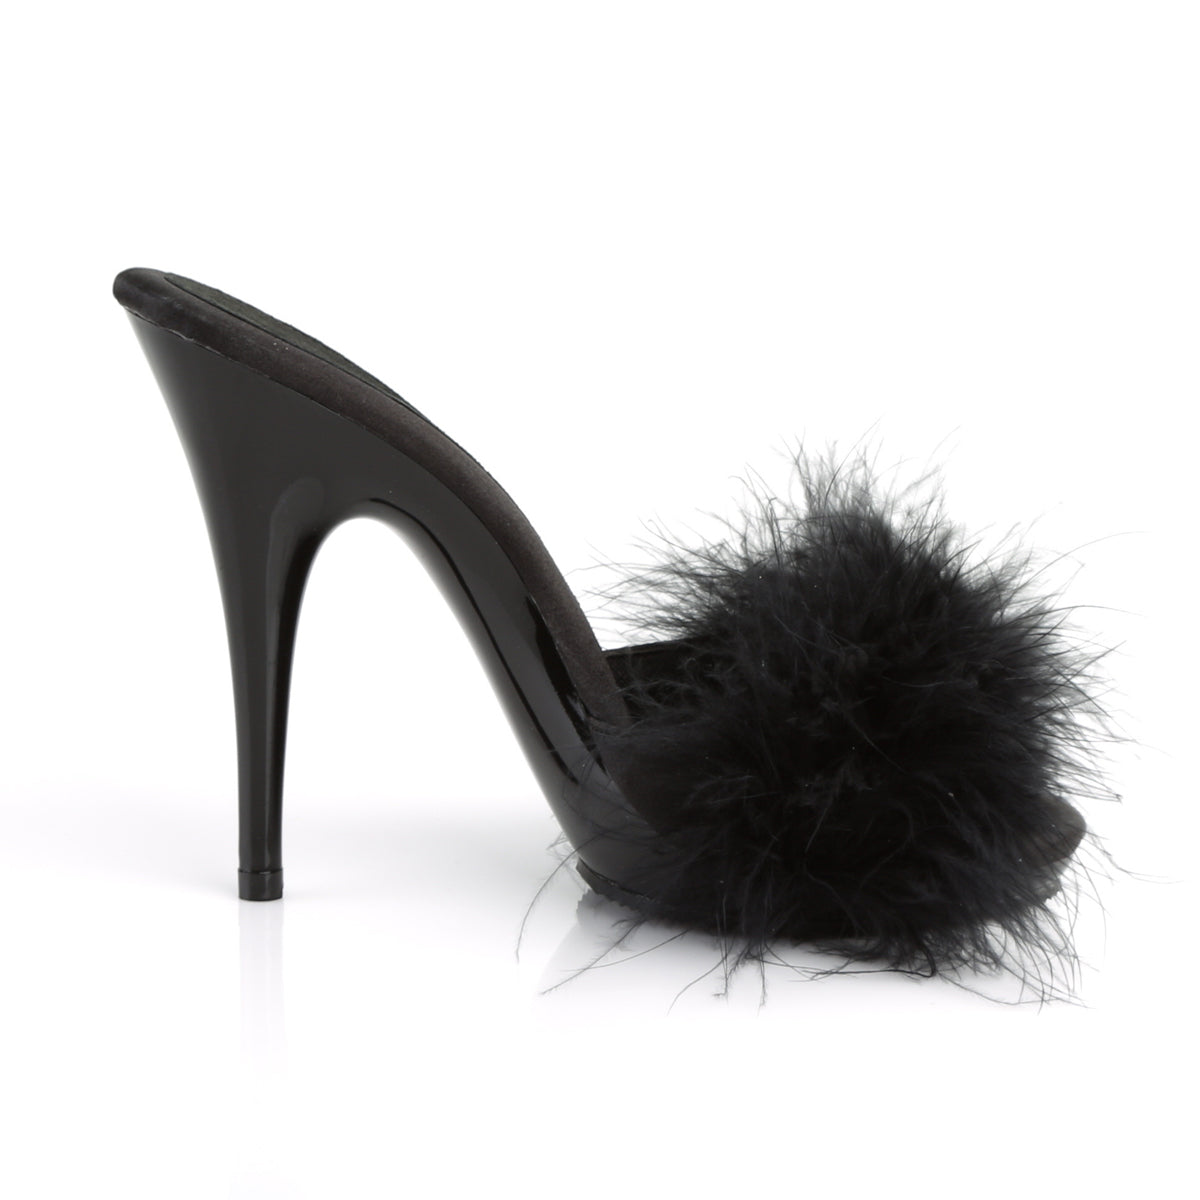 POISE-501F Fabulicious 5 Inch Heel Black Satin Sexy Shoes-Fabulicious- Sexy Shoes Fetish Heels